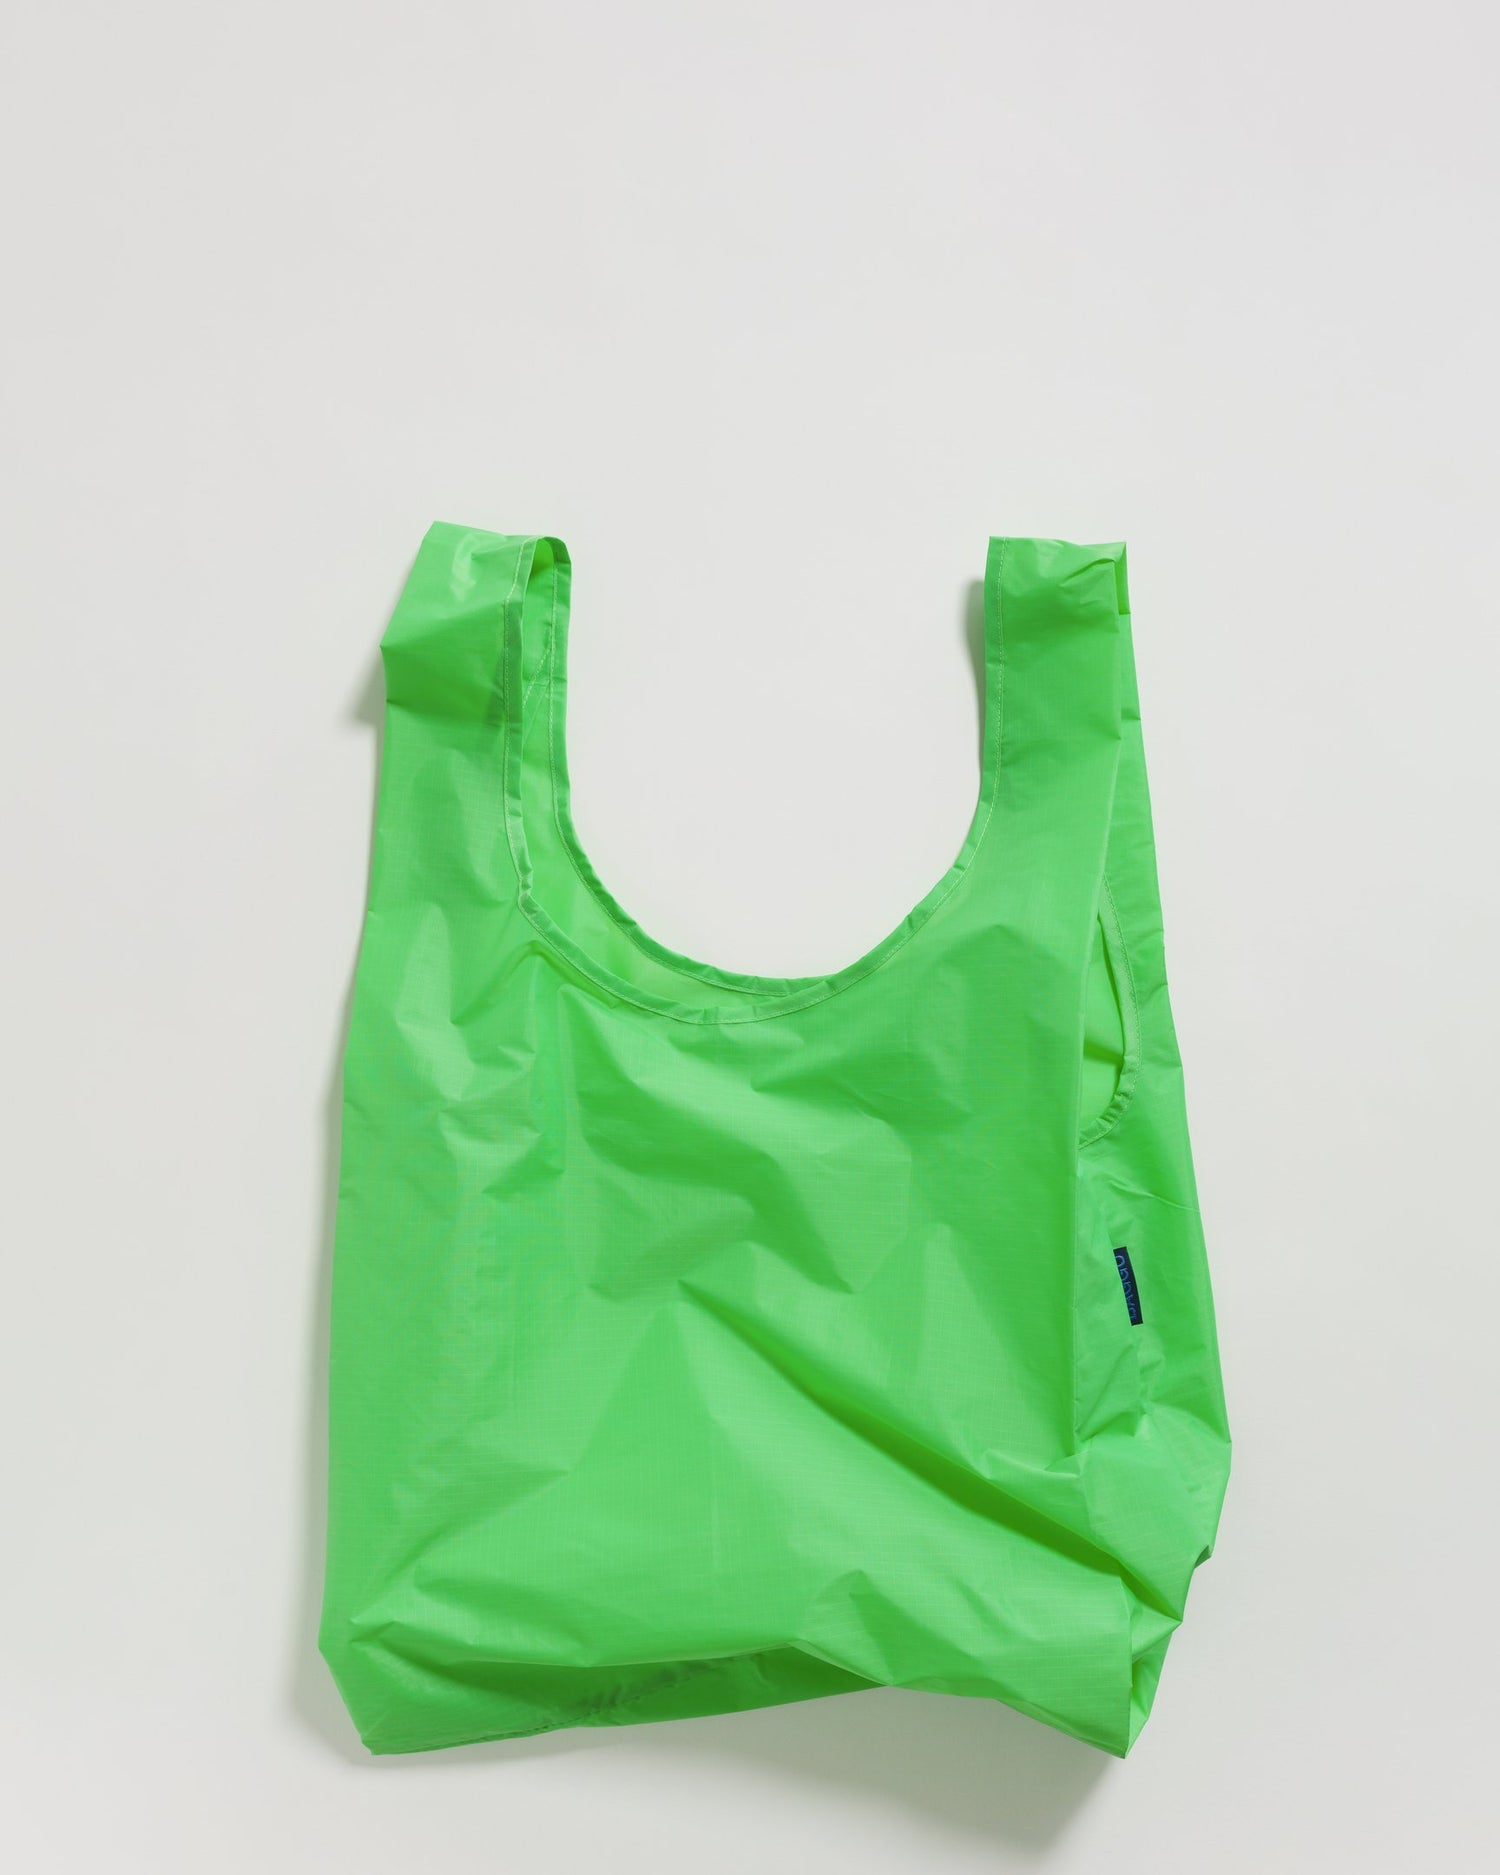 Baggu Standard Reusable Bag - Aloe